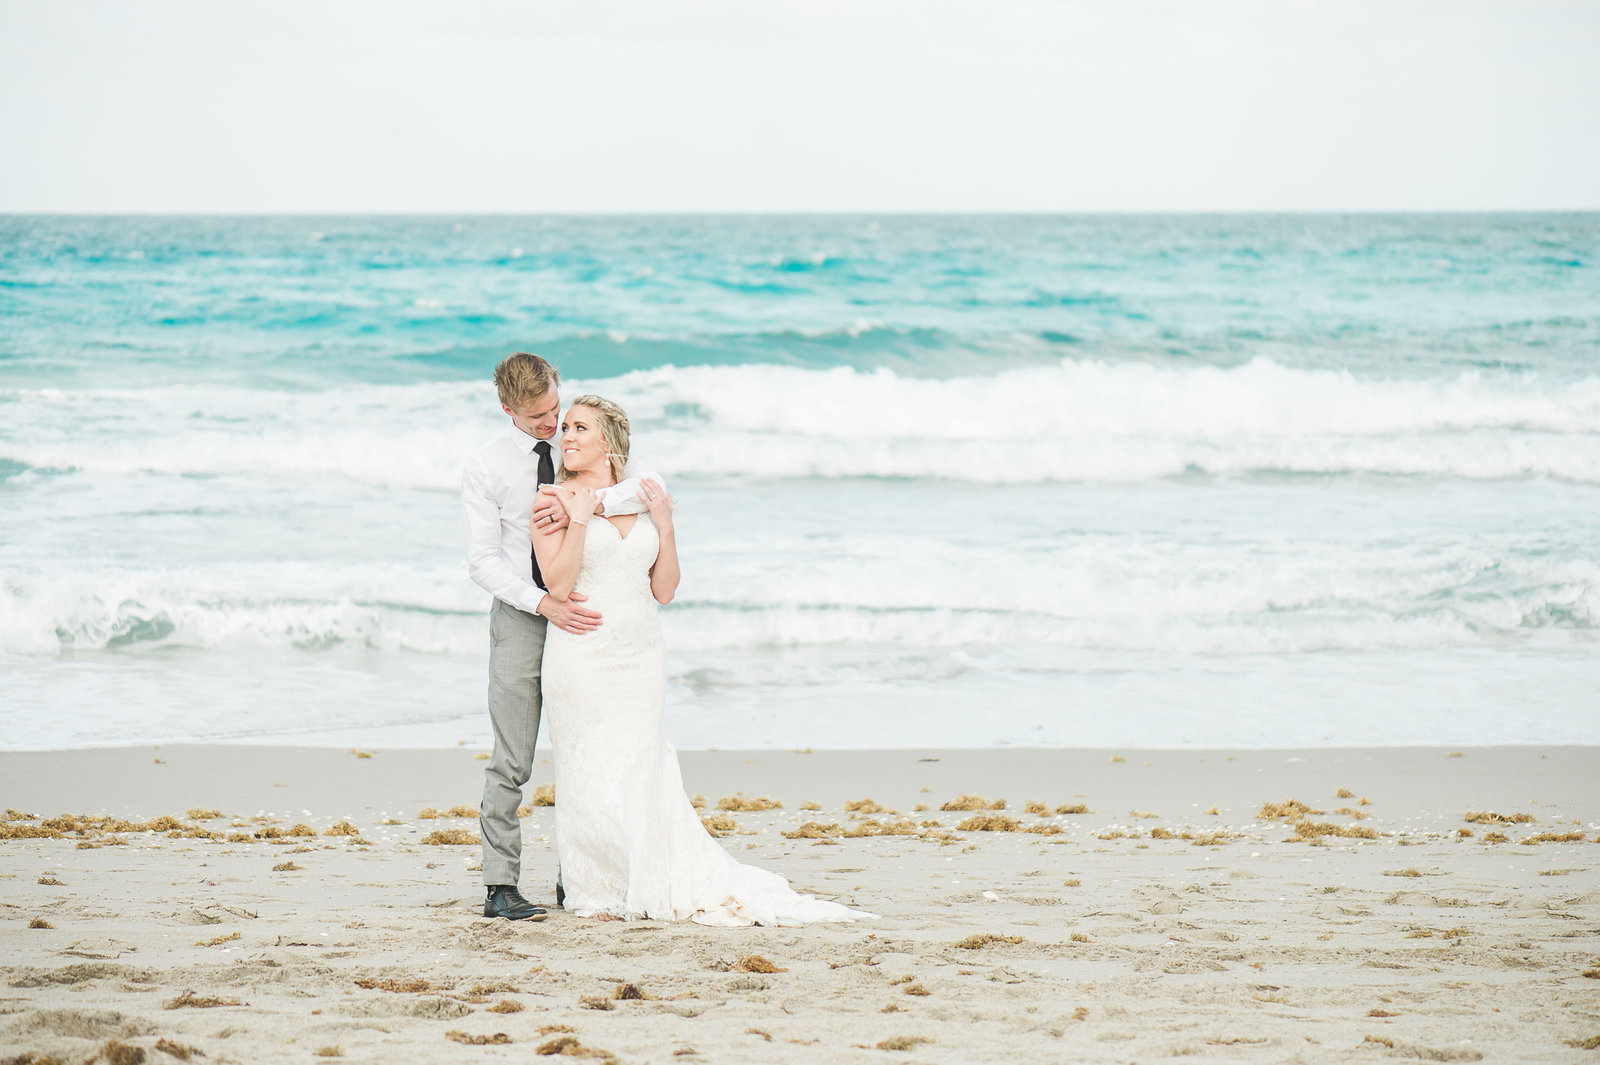 Beach Theme Wedding - Hilton Singer Island Wedding - Palm Beach Wedding Photography by Palm Beach Photography, Inc.